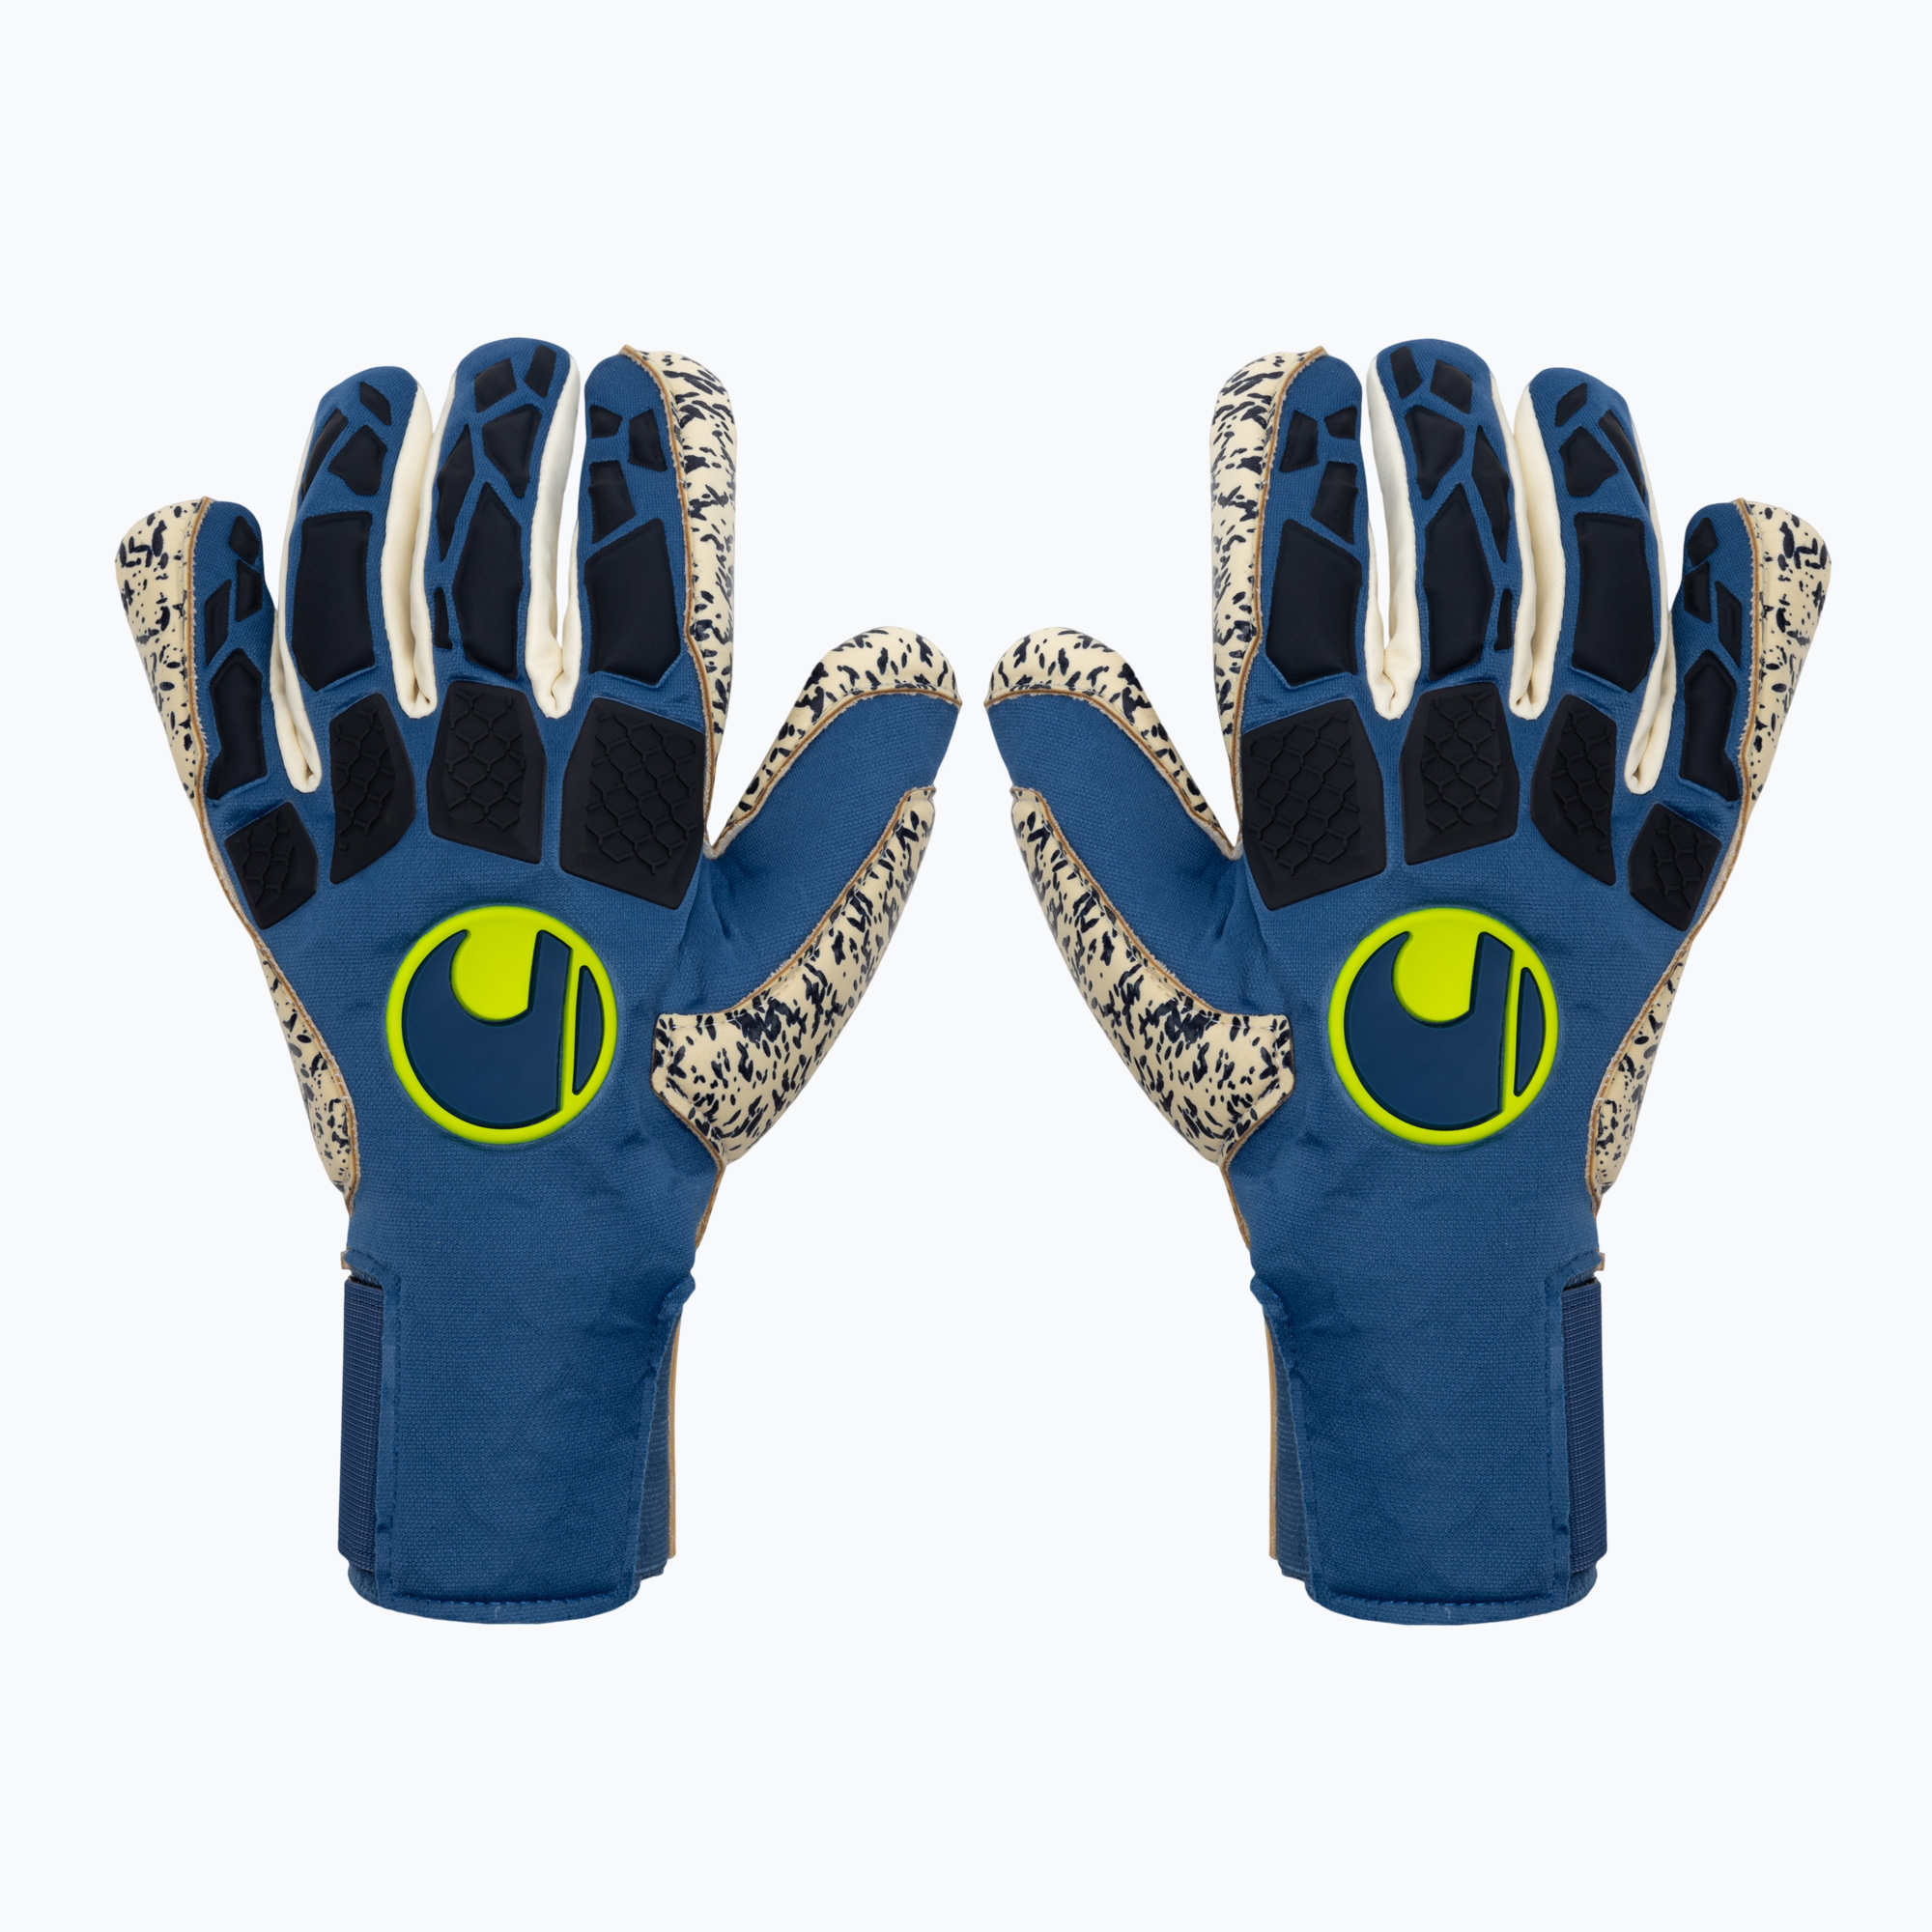 Uhlsport Hyperact Supergrip  HN modro-biele brankárske rukavice 101123201